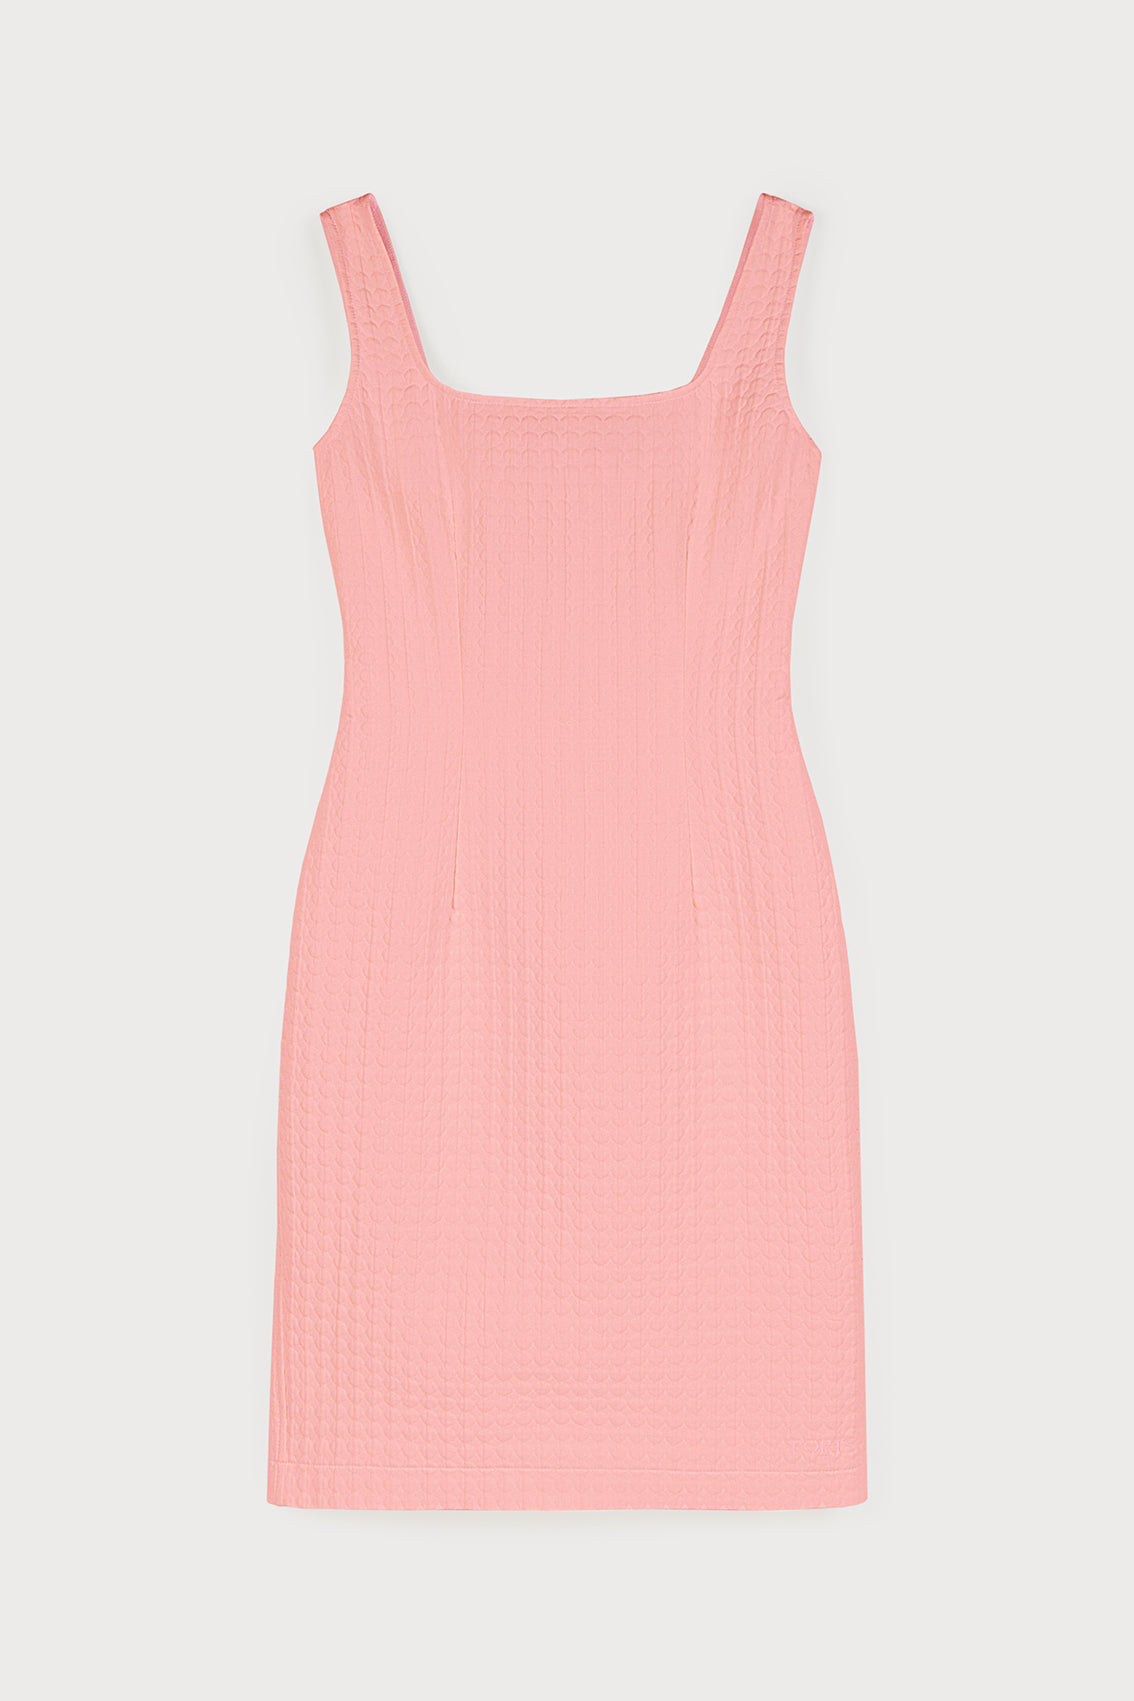 Matalasse Dots Sleeveless Dress in Coral Pink